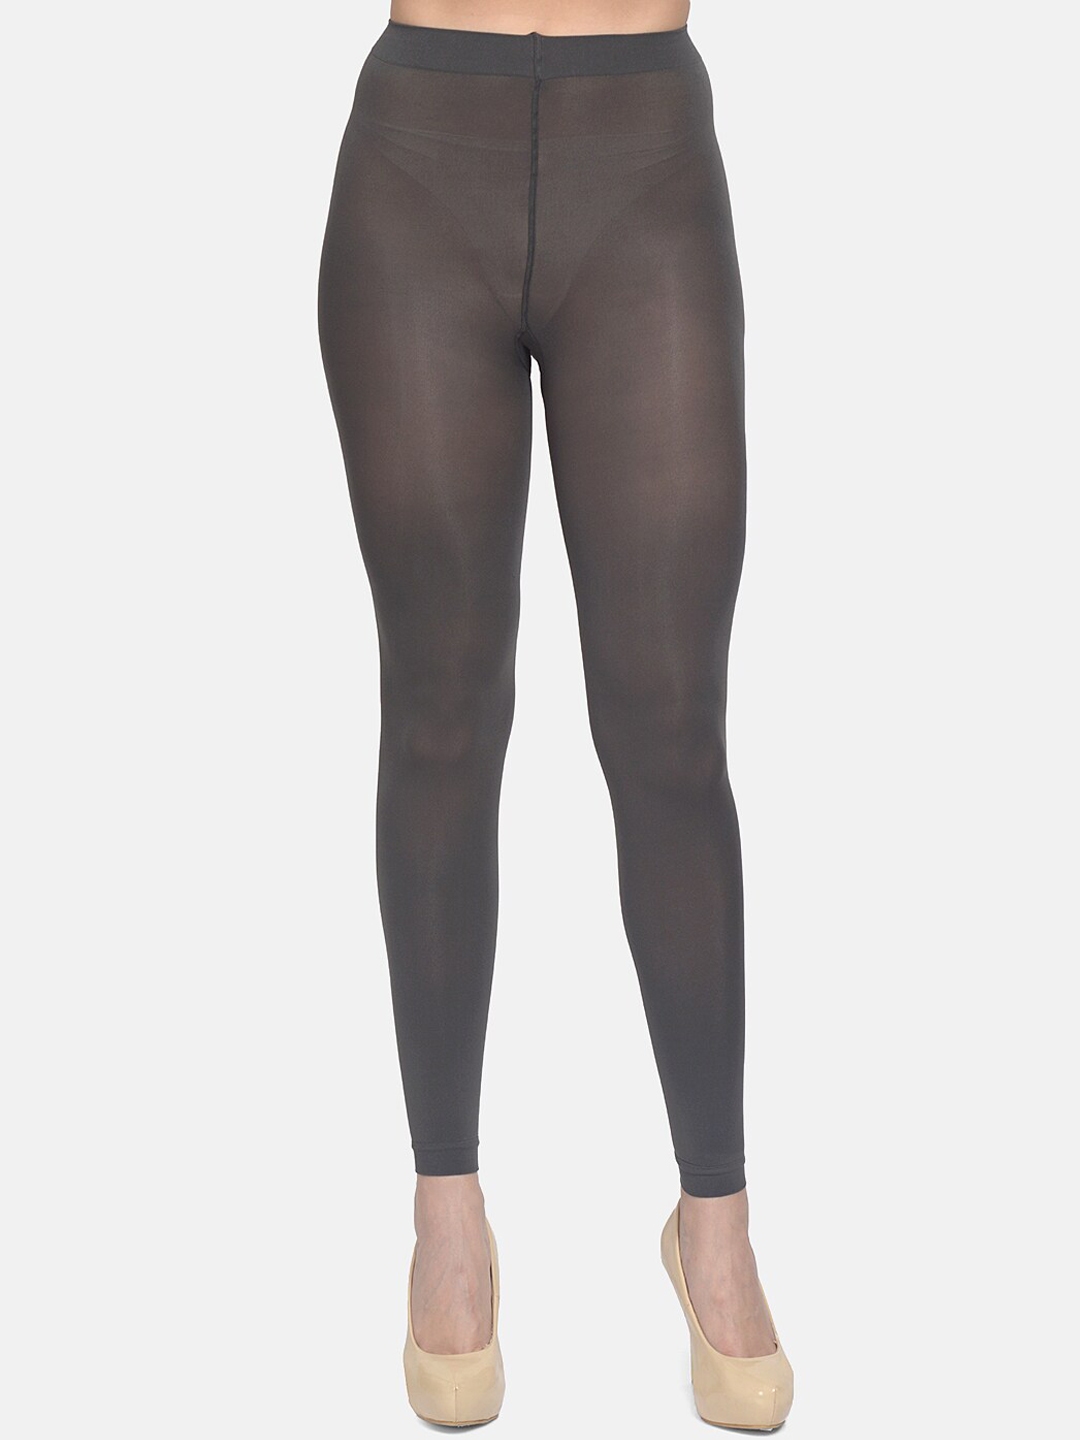 Buy Mod & Shy Women Self Design Pantyhose Stockings Black Online